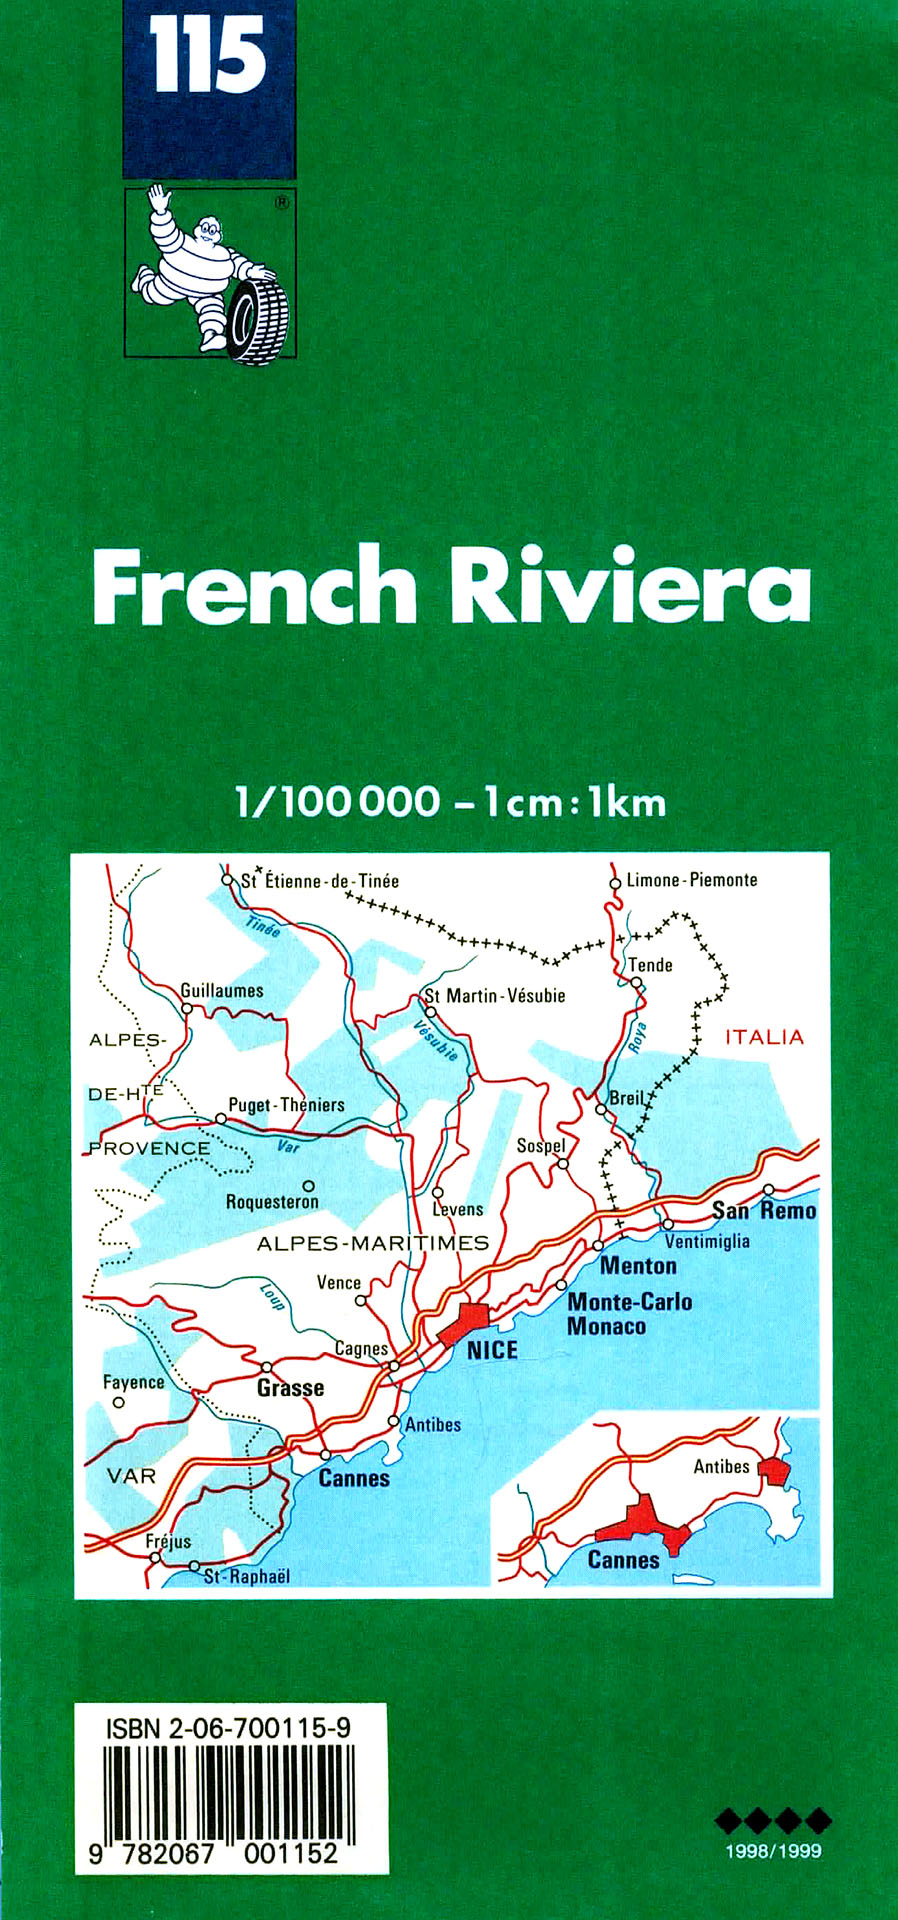 French Rivera - Cote d'Azur Alpes - Maritimes 